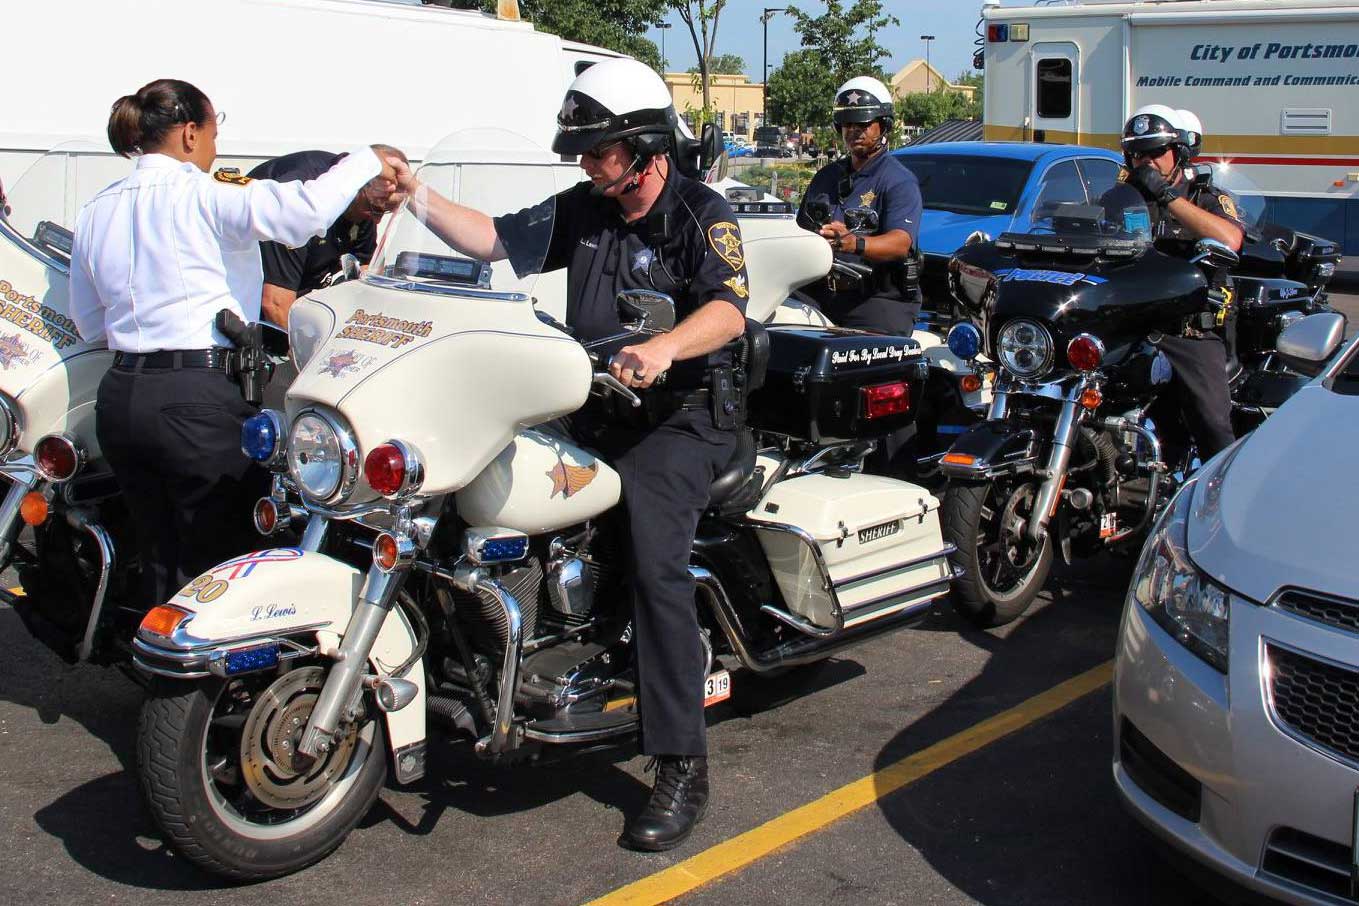 Sheriff's deputies on motorcycles